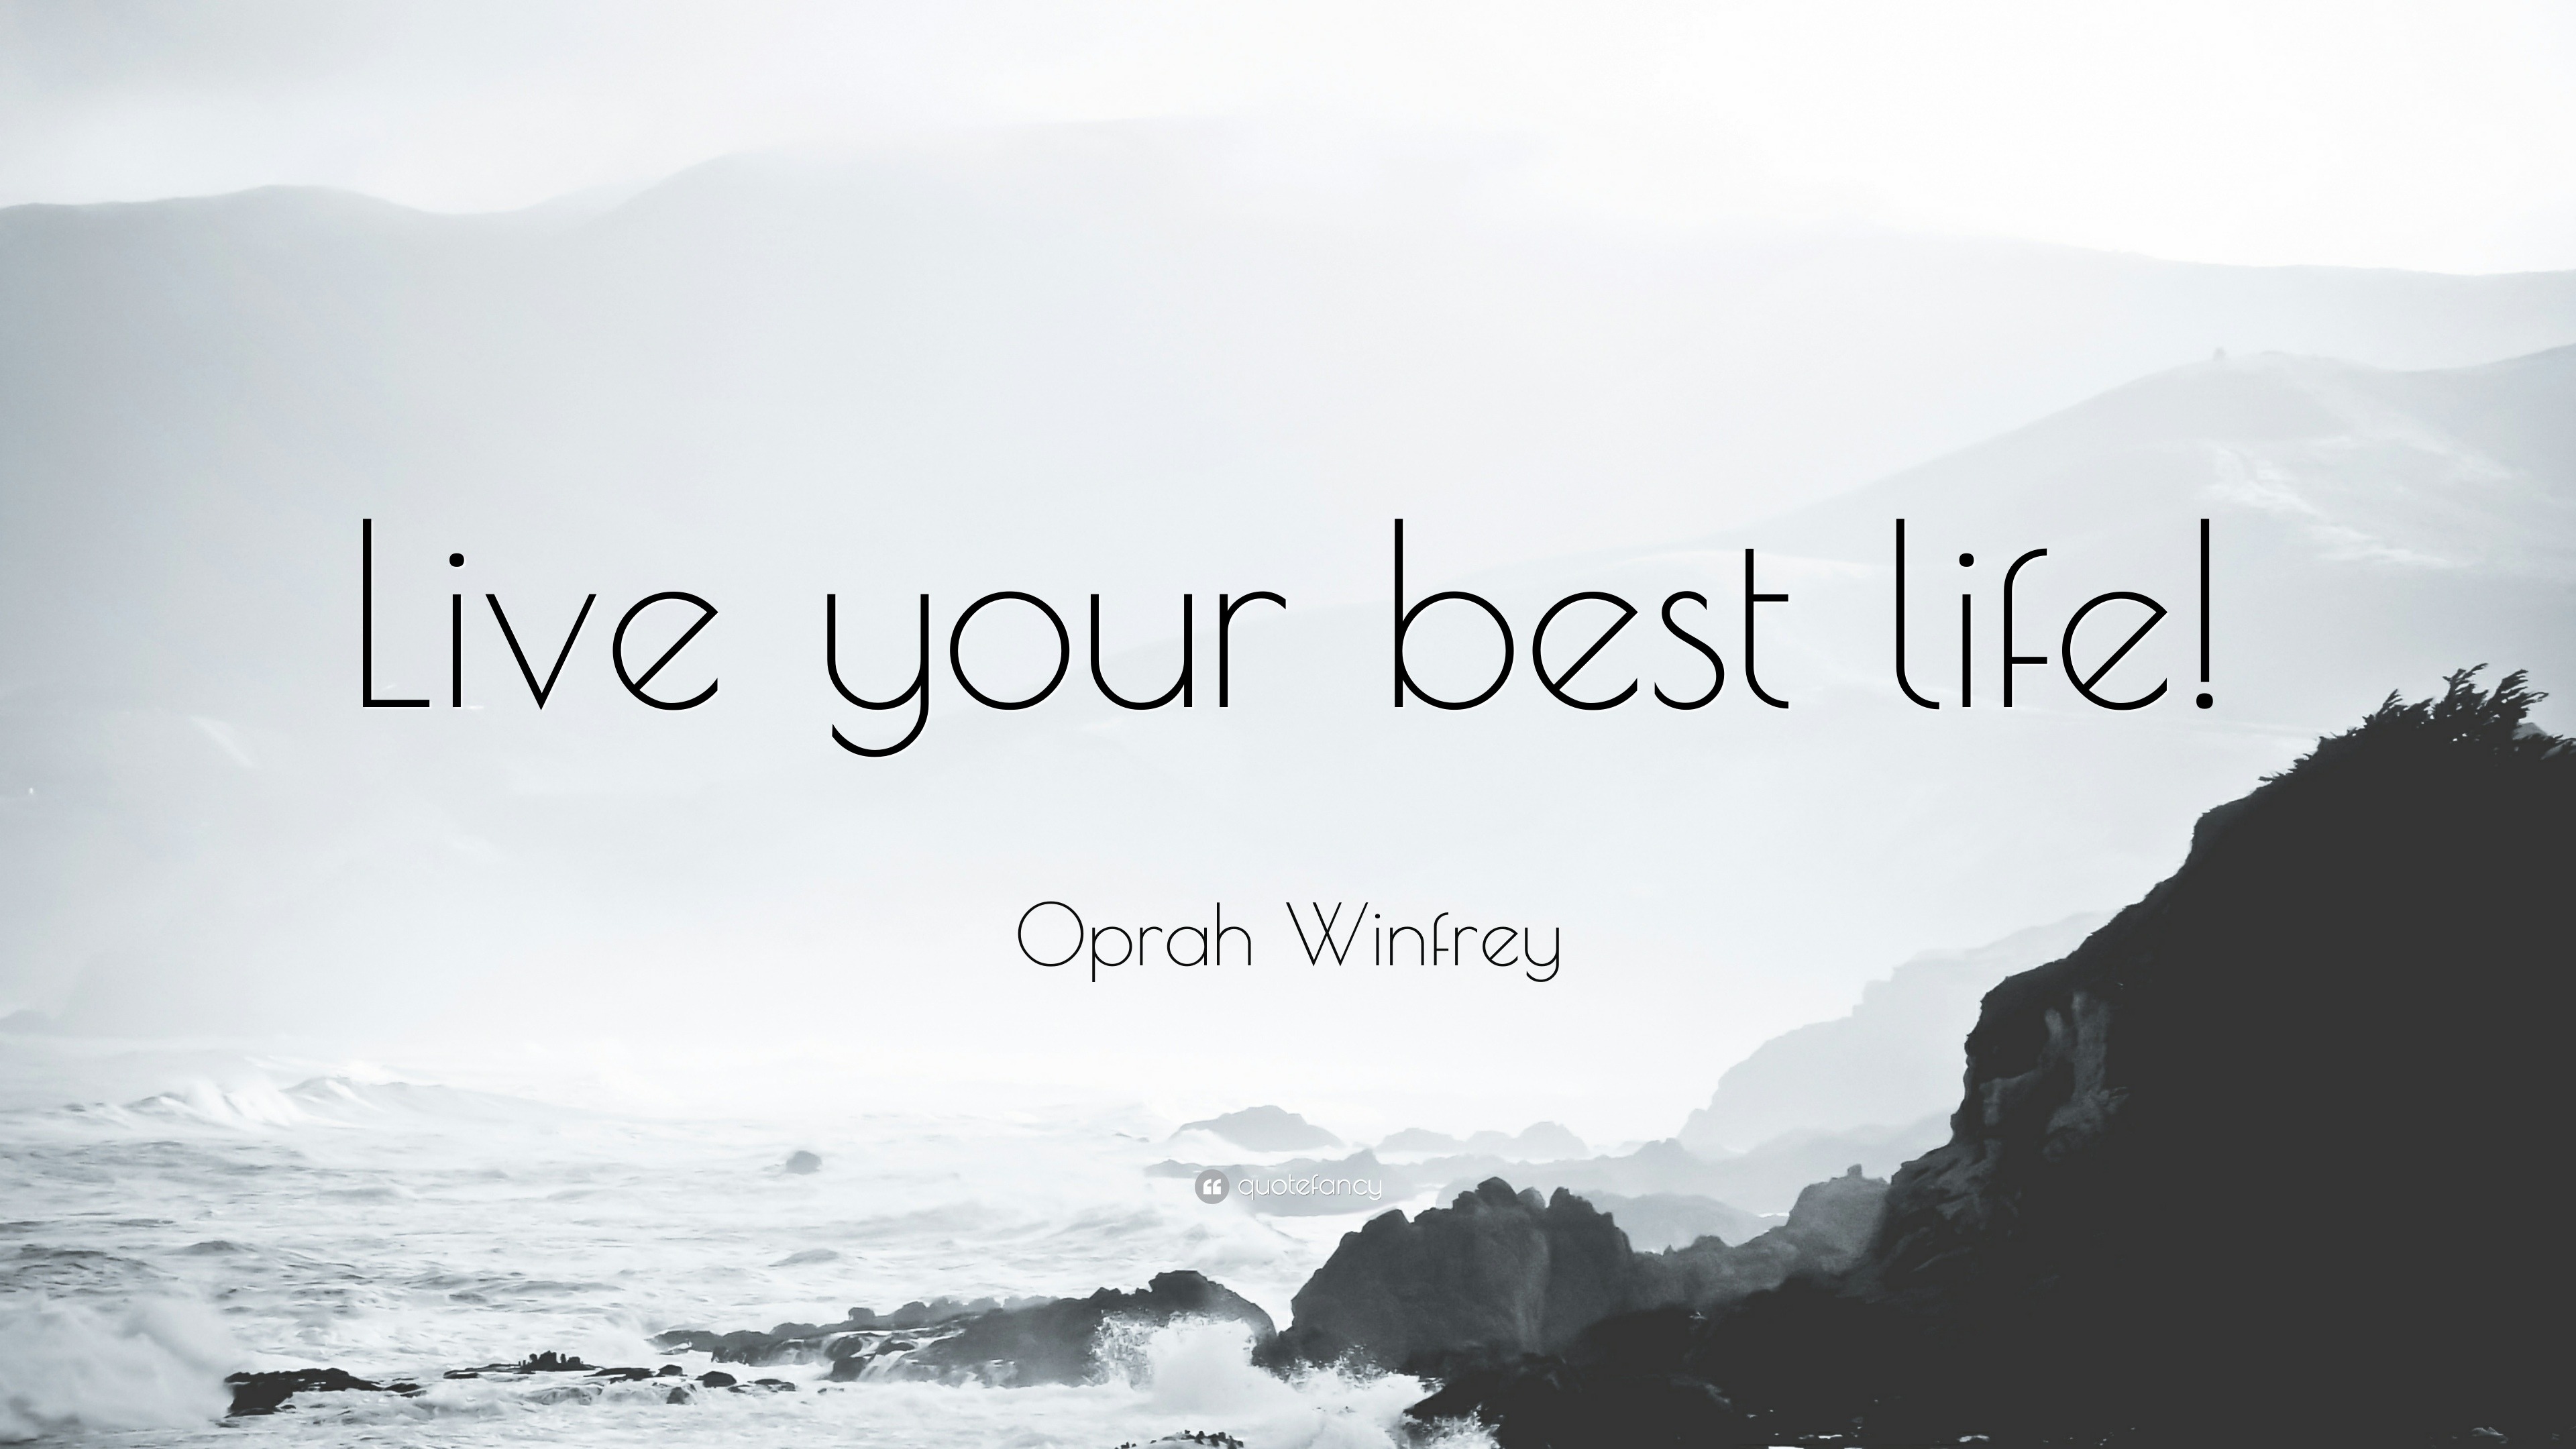 Oprah Winfrey Quote “Live your best life ”